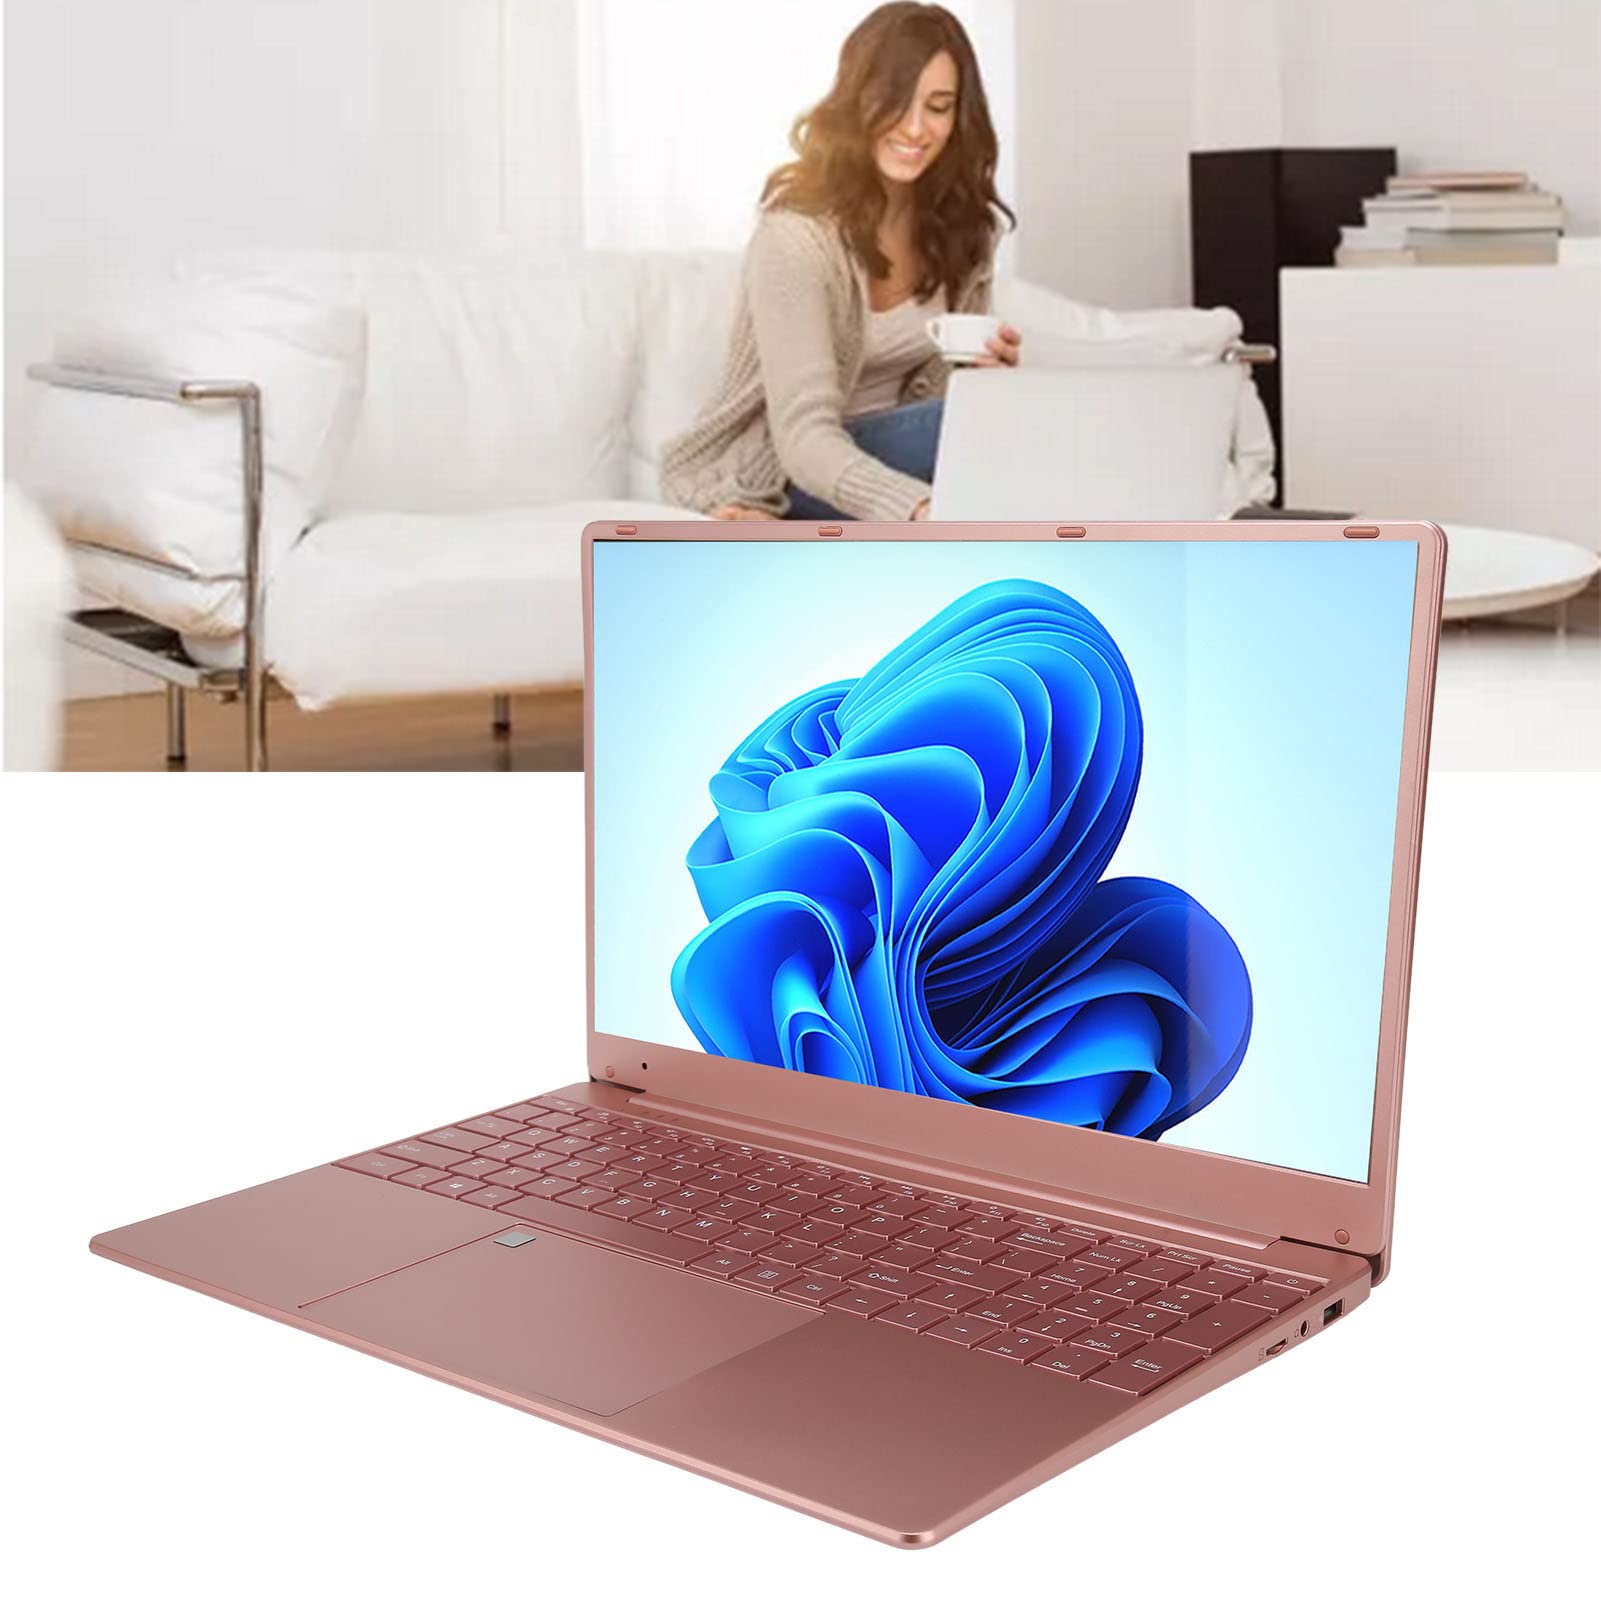 Tangxi 15.6in WIN10 Laptop,2K IPS Screen 2.4G 5G WiFi Laptop Computers with Fingerprint Unlock,Backlight Keyboard,12GB RAM 1TB ROM,7000mAh Battery,Rose Gold